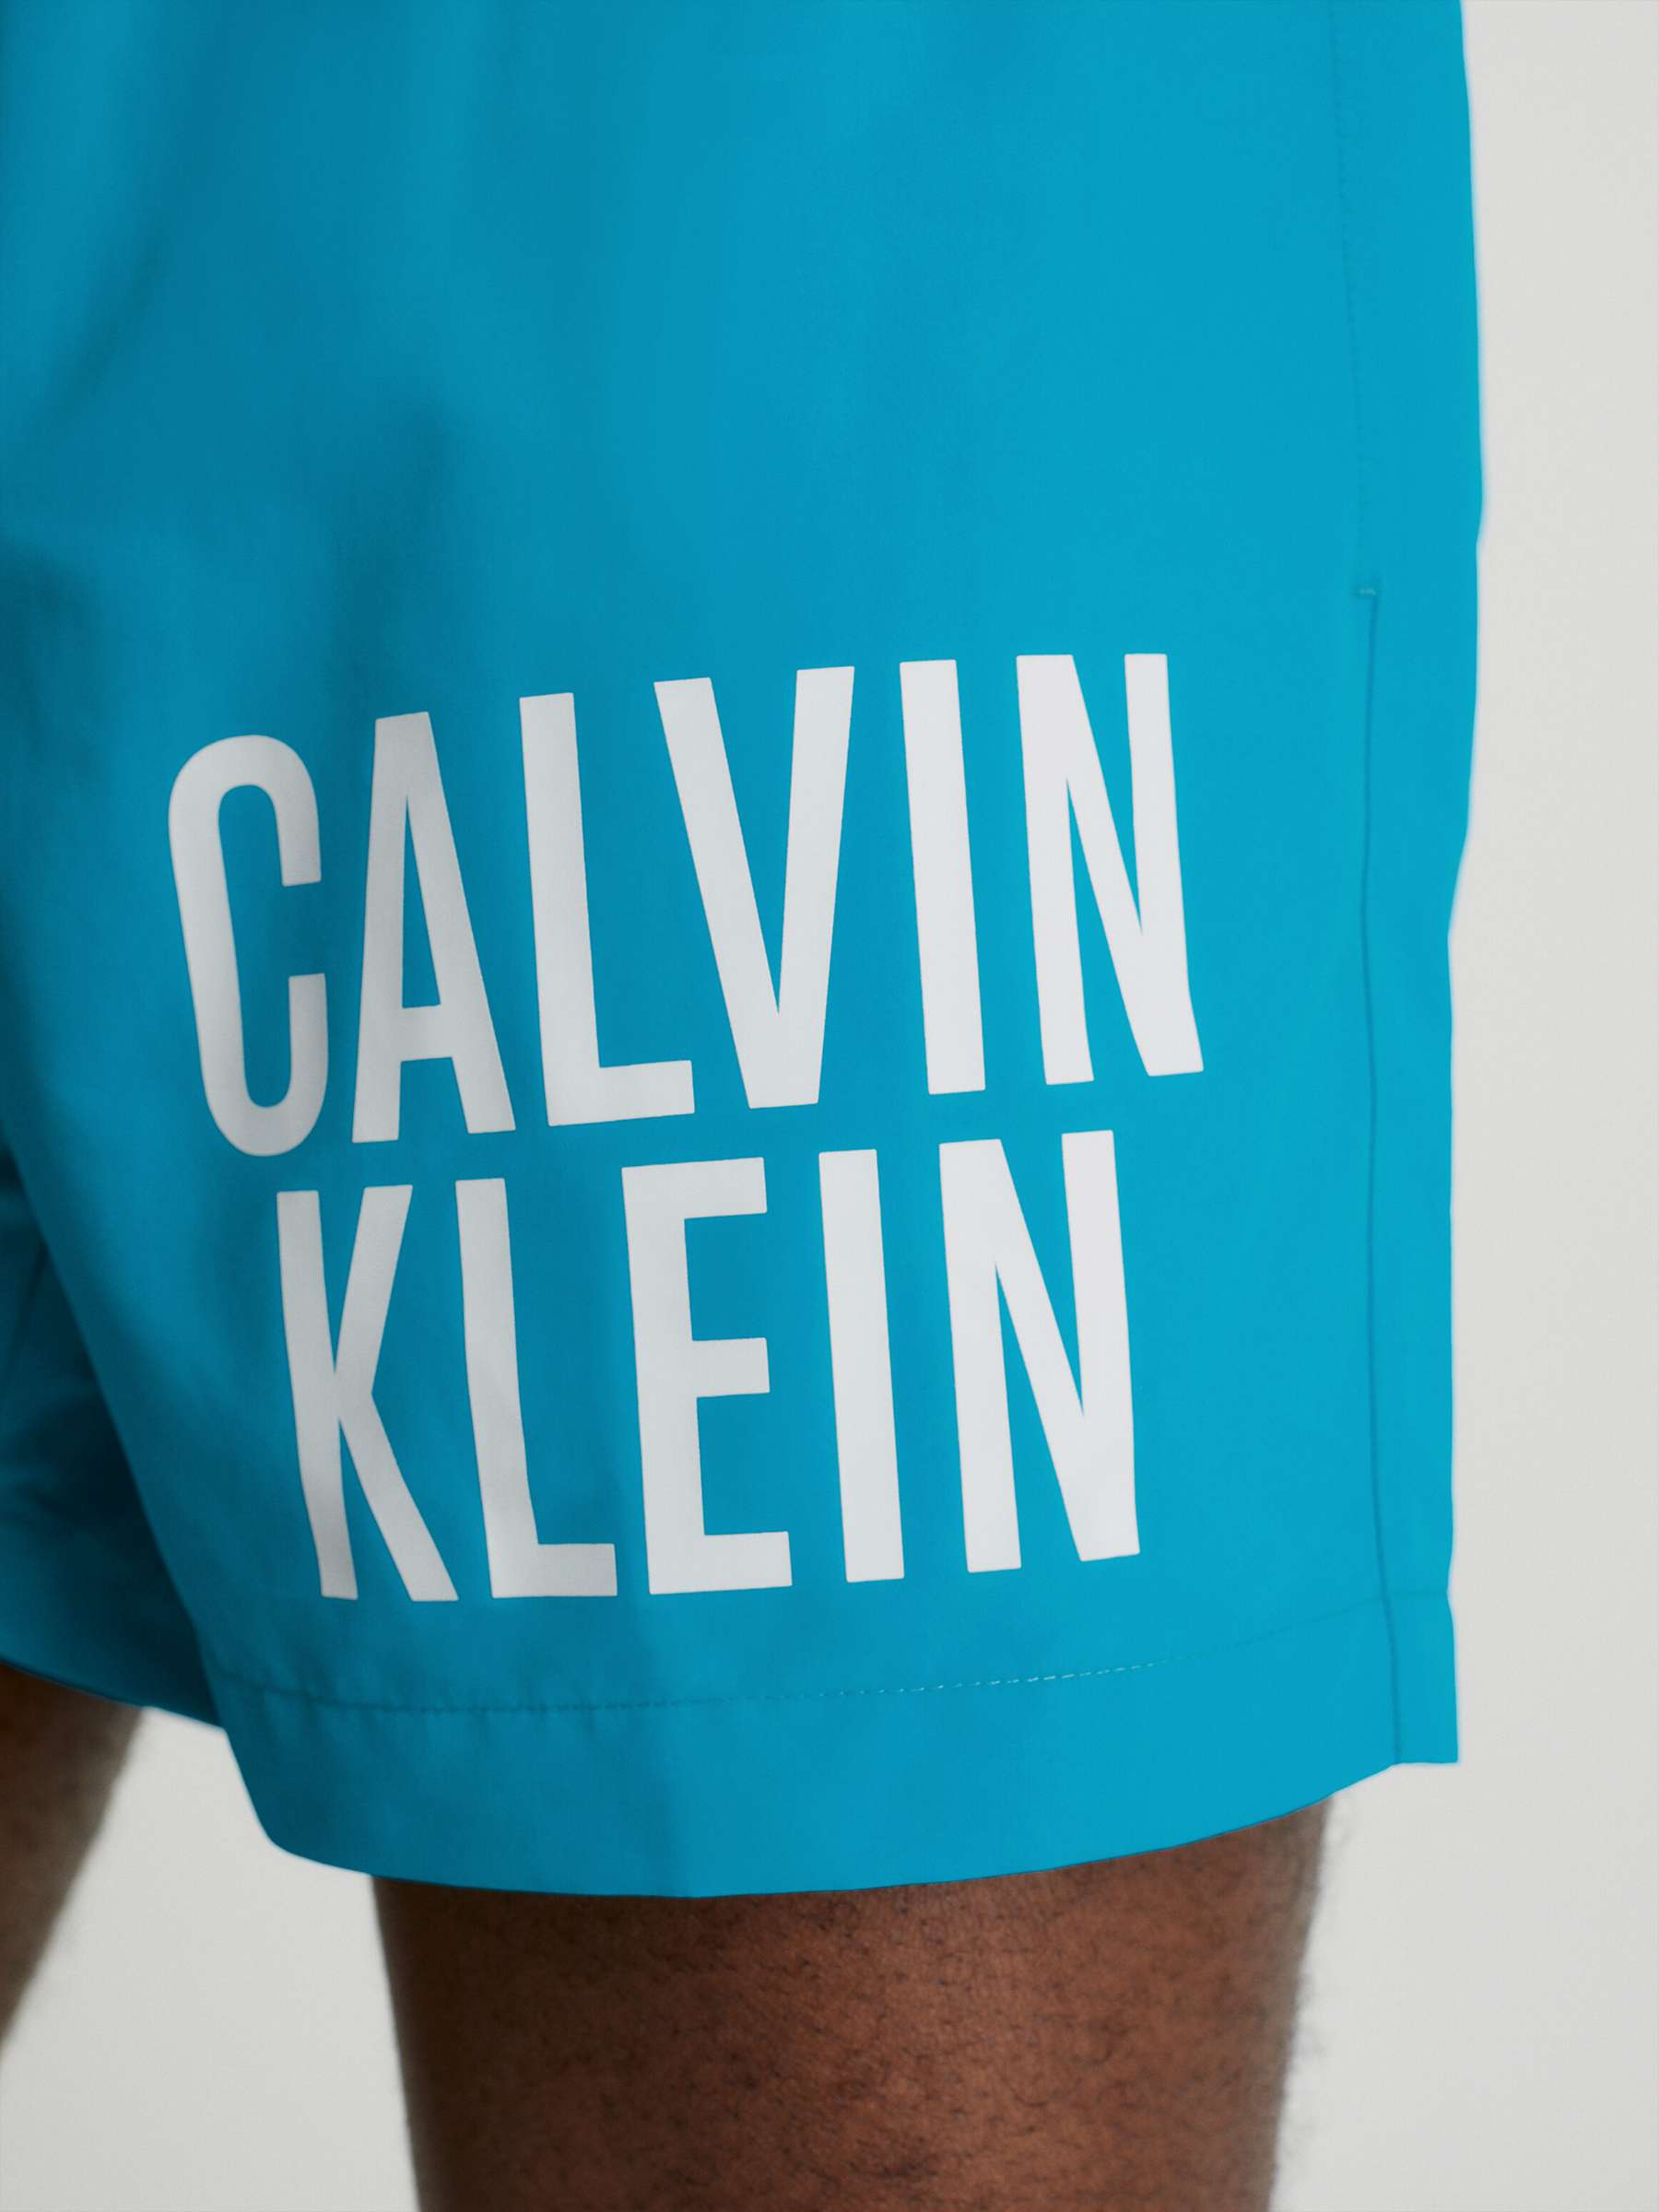 Buy Calvin Klein Intense Power Recycled Poly Swim Shorts Online at johnlewis.com